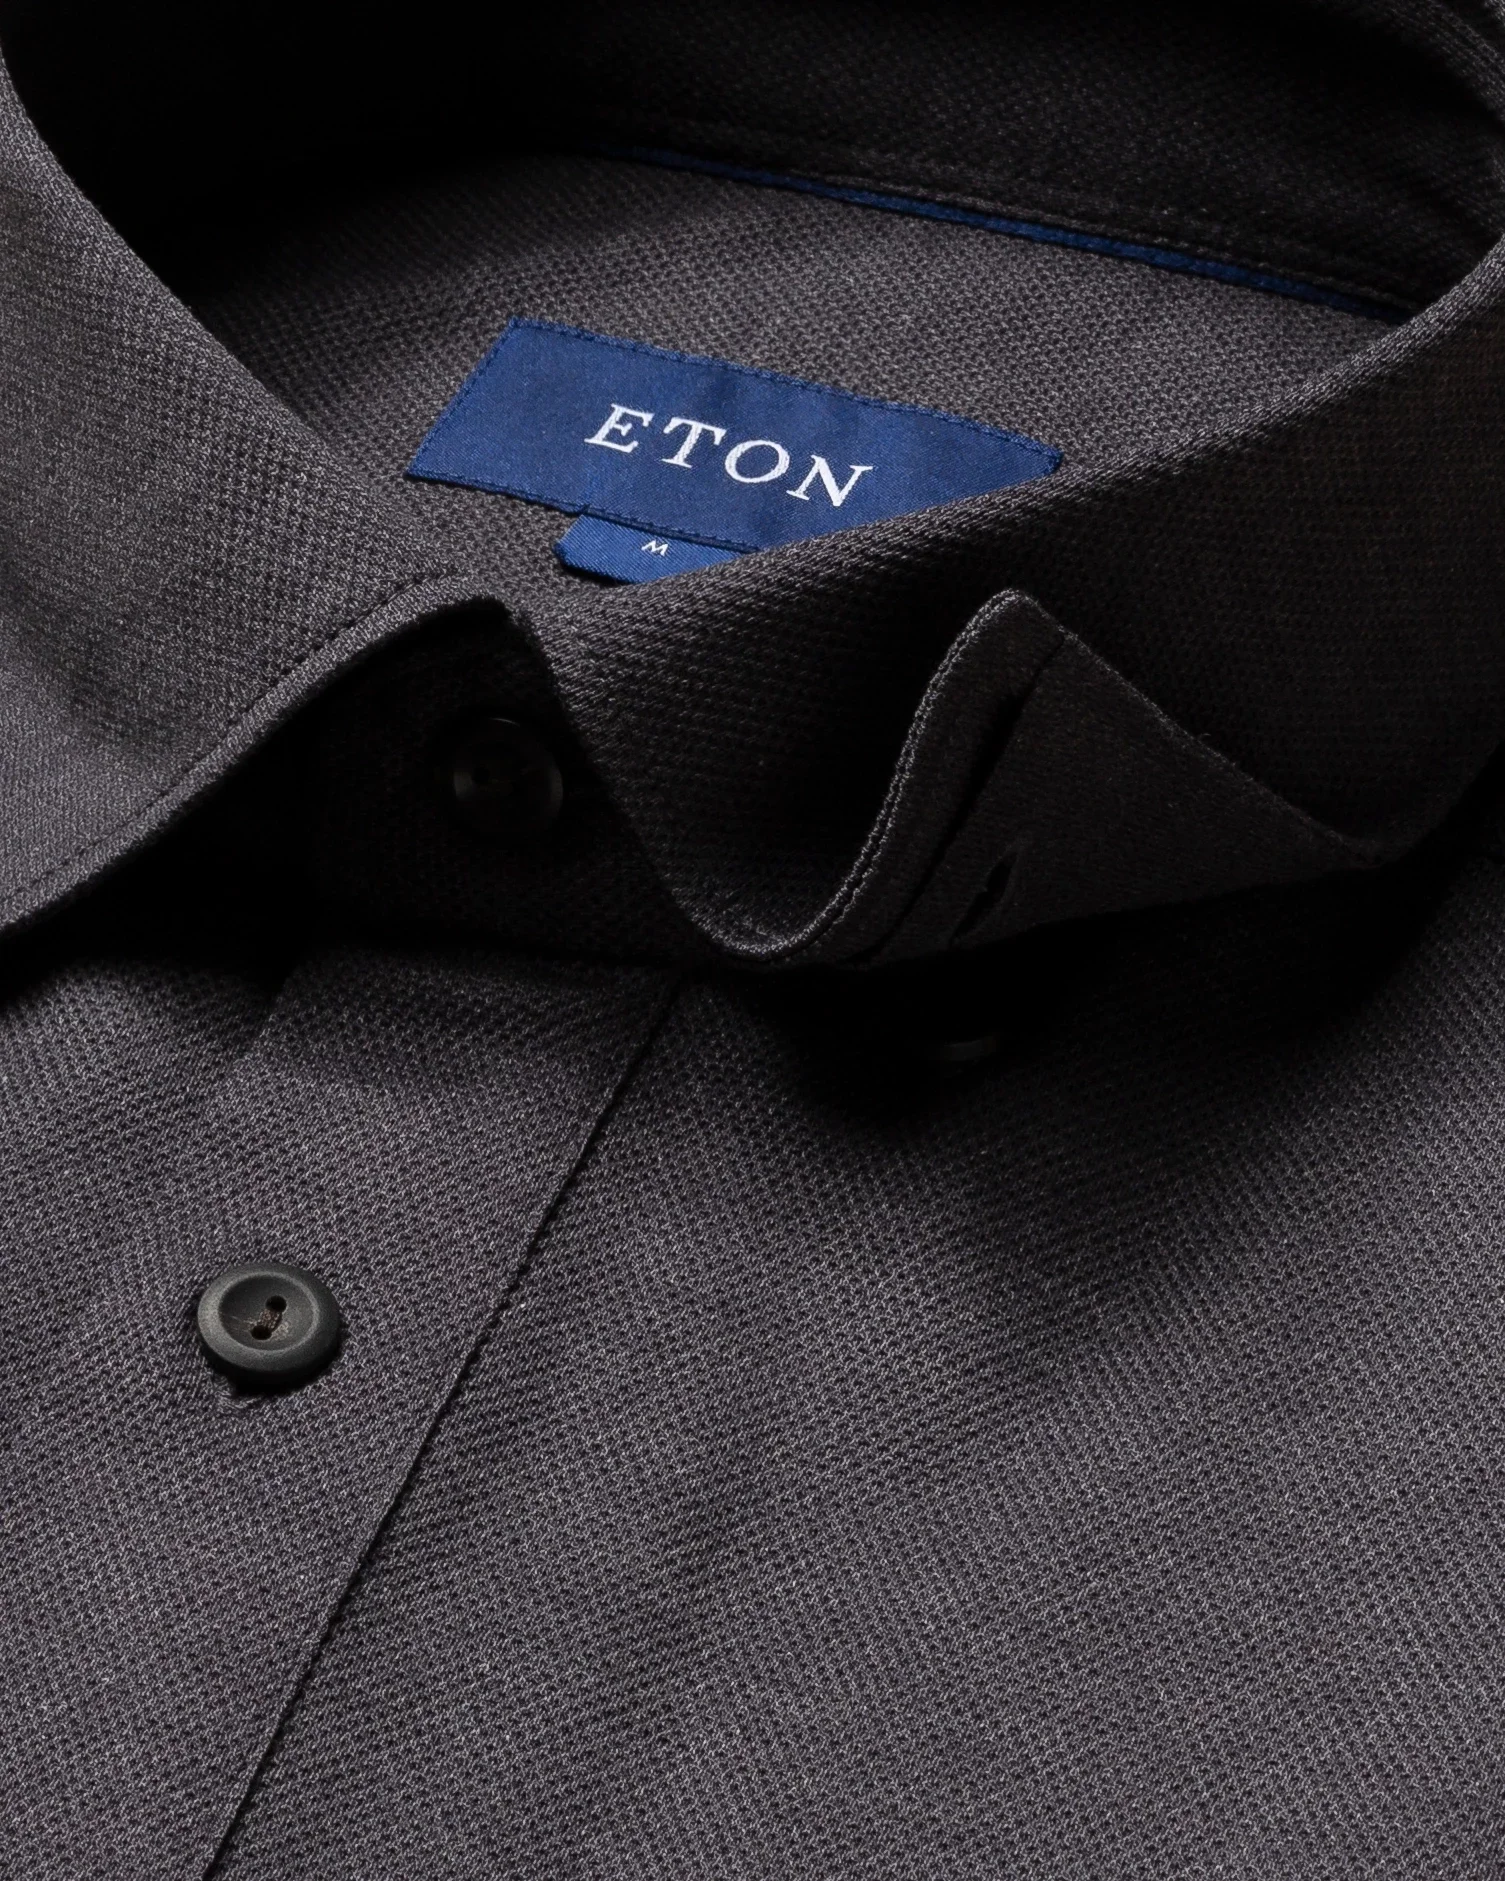 Eton - dark grey polo shirt short sleeved